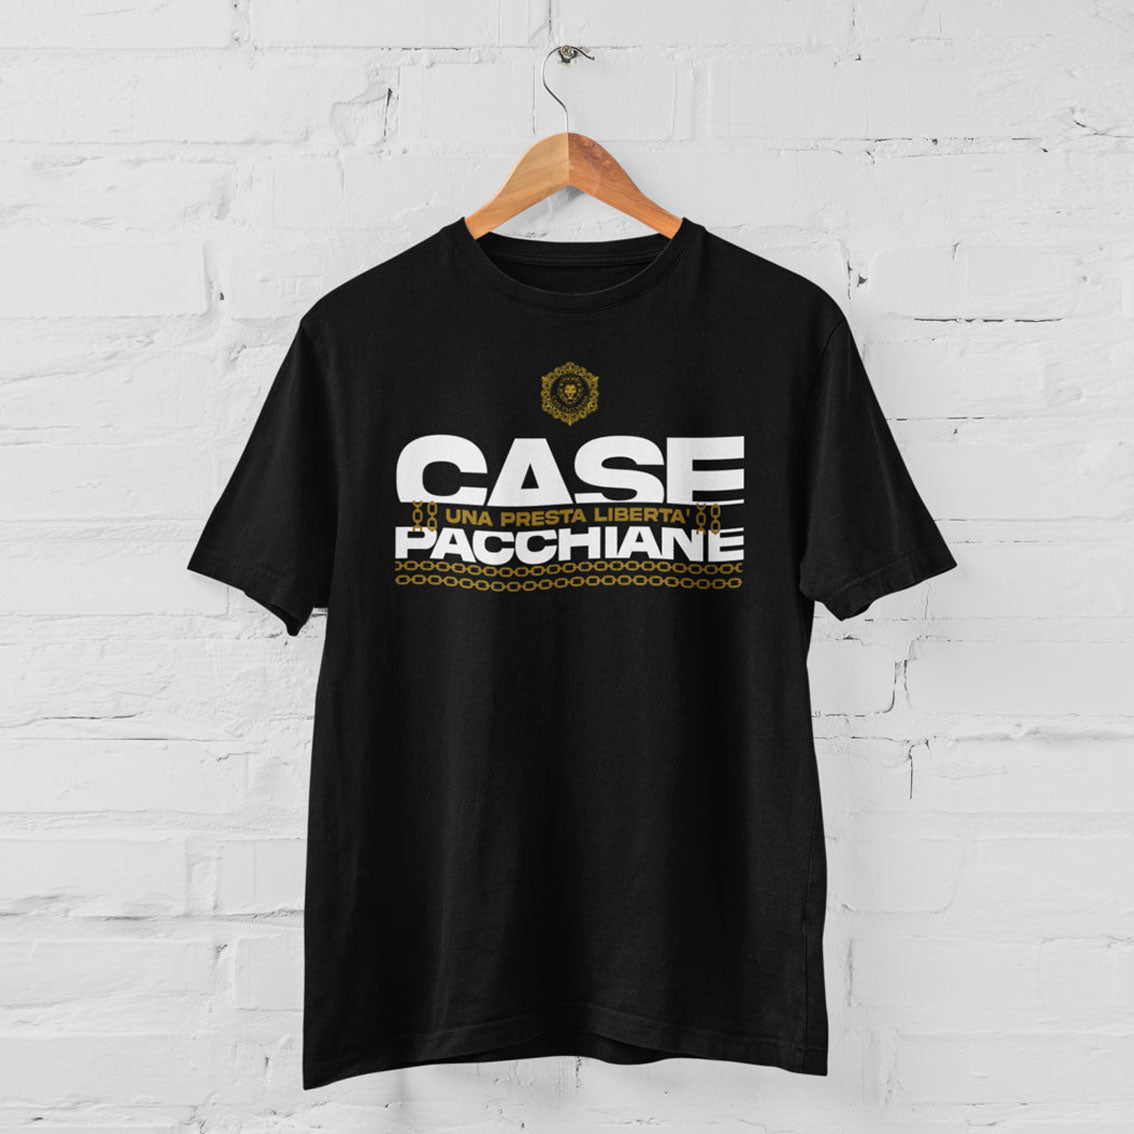 Official T-shirt Case Pacchiane "Presta Libertà"